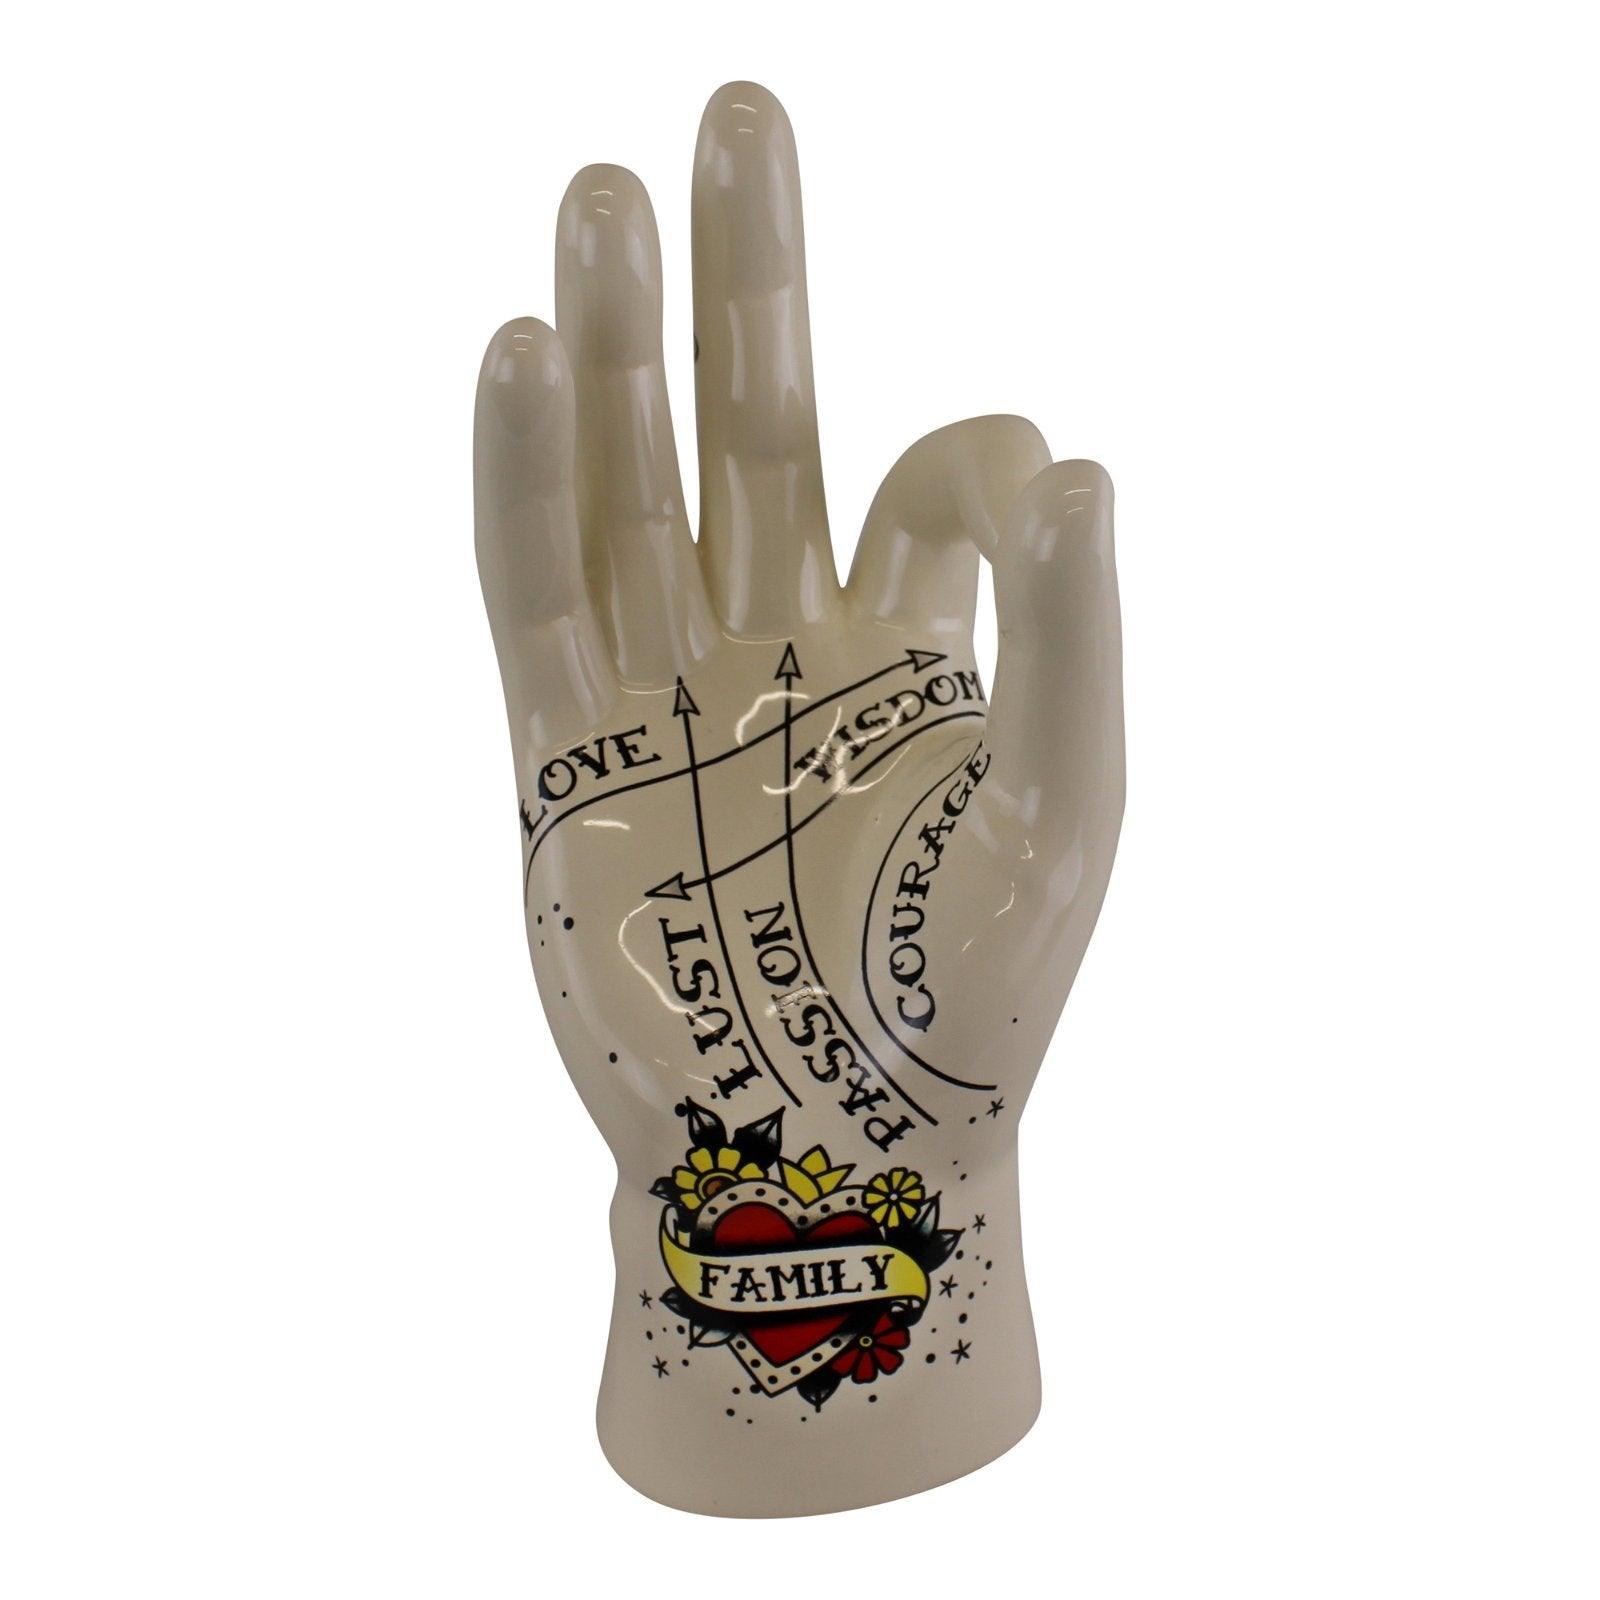 Palmistry Hand, Family, 22.5cm-Phrenology